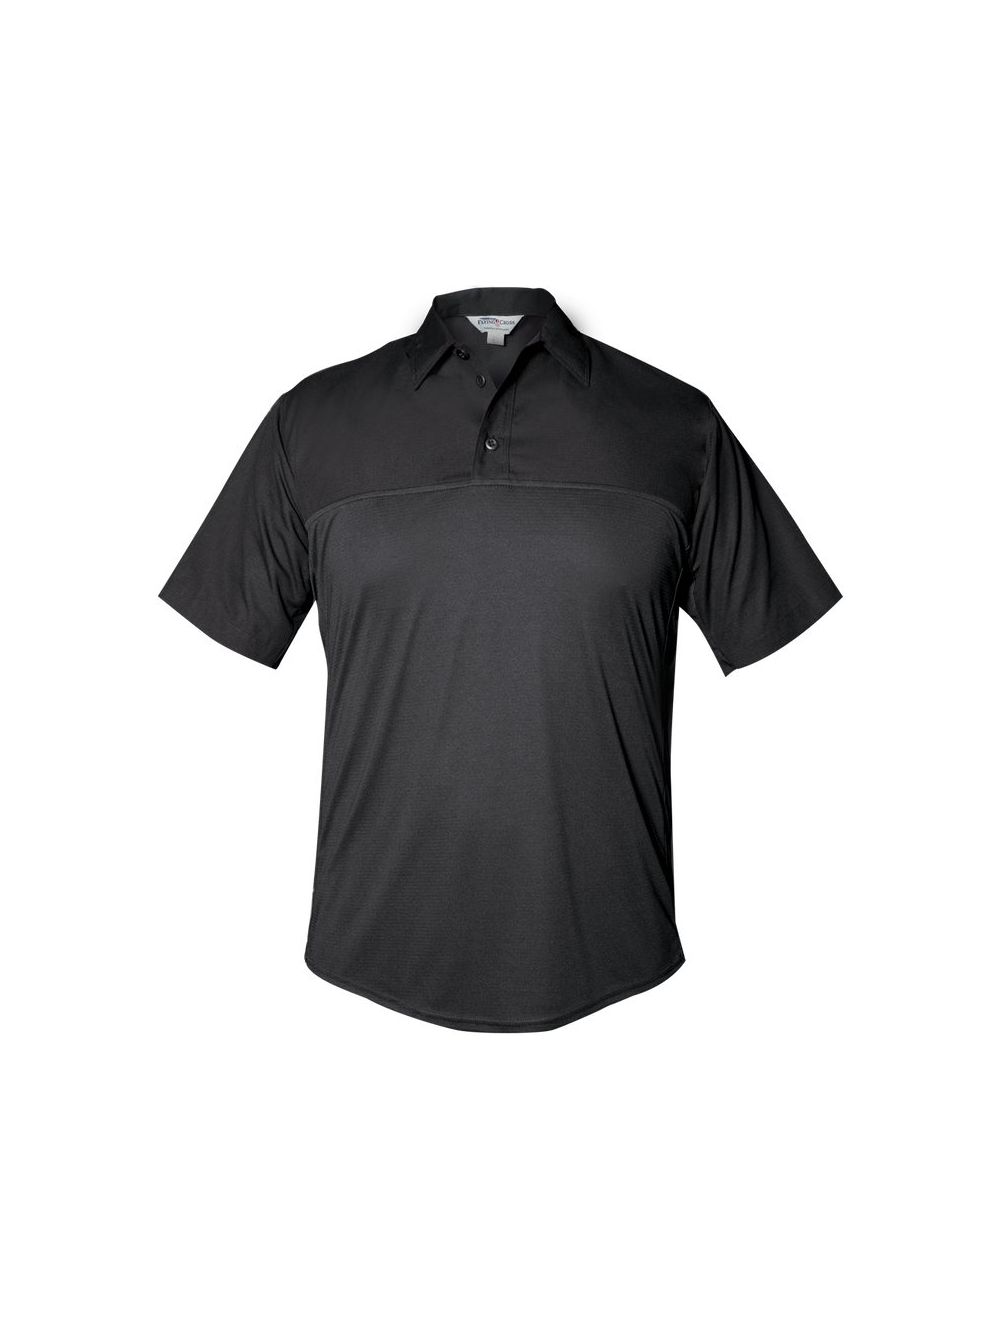 FX STAT Short Sleeve Hybrid Shirt